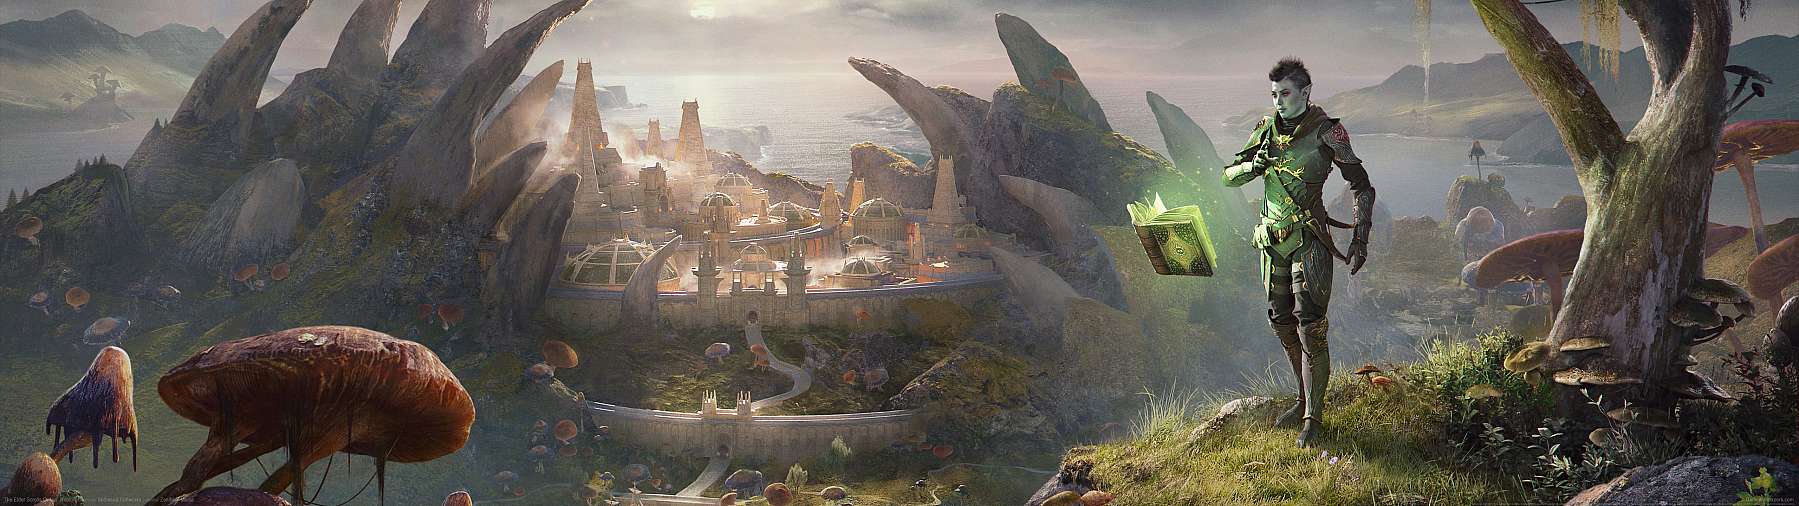 The Elder Scrolls Online: Necrom superwide wallpaper or background 01